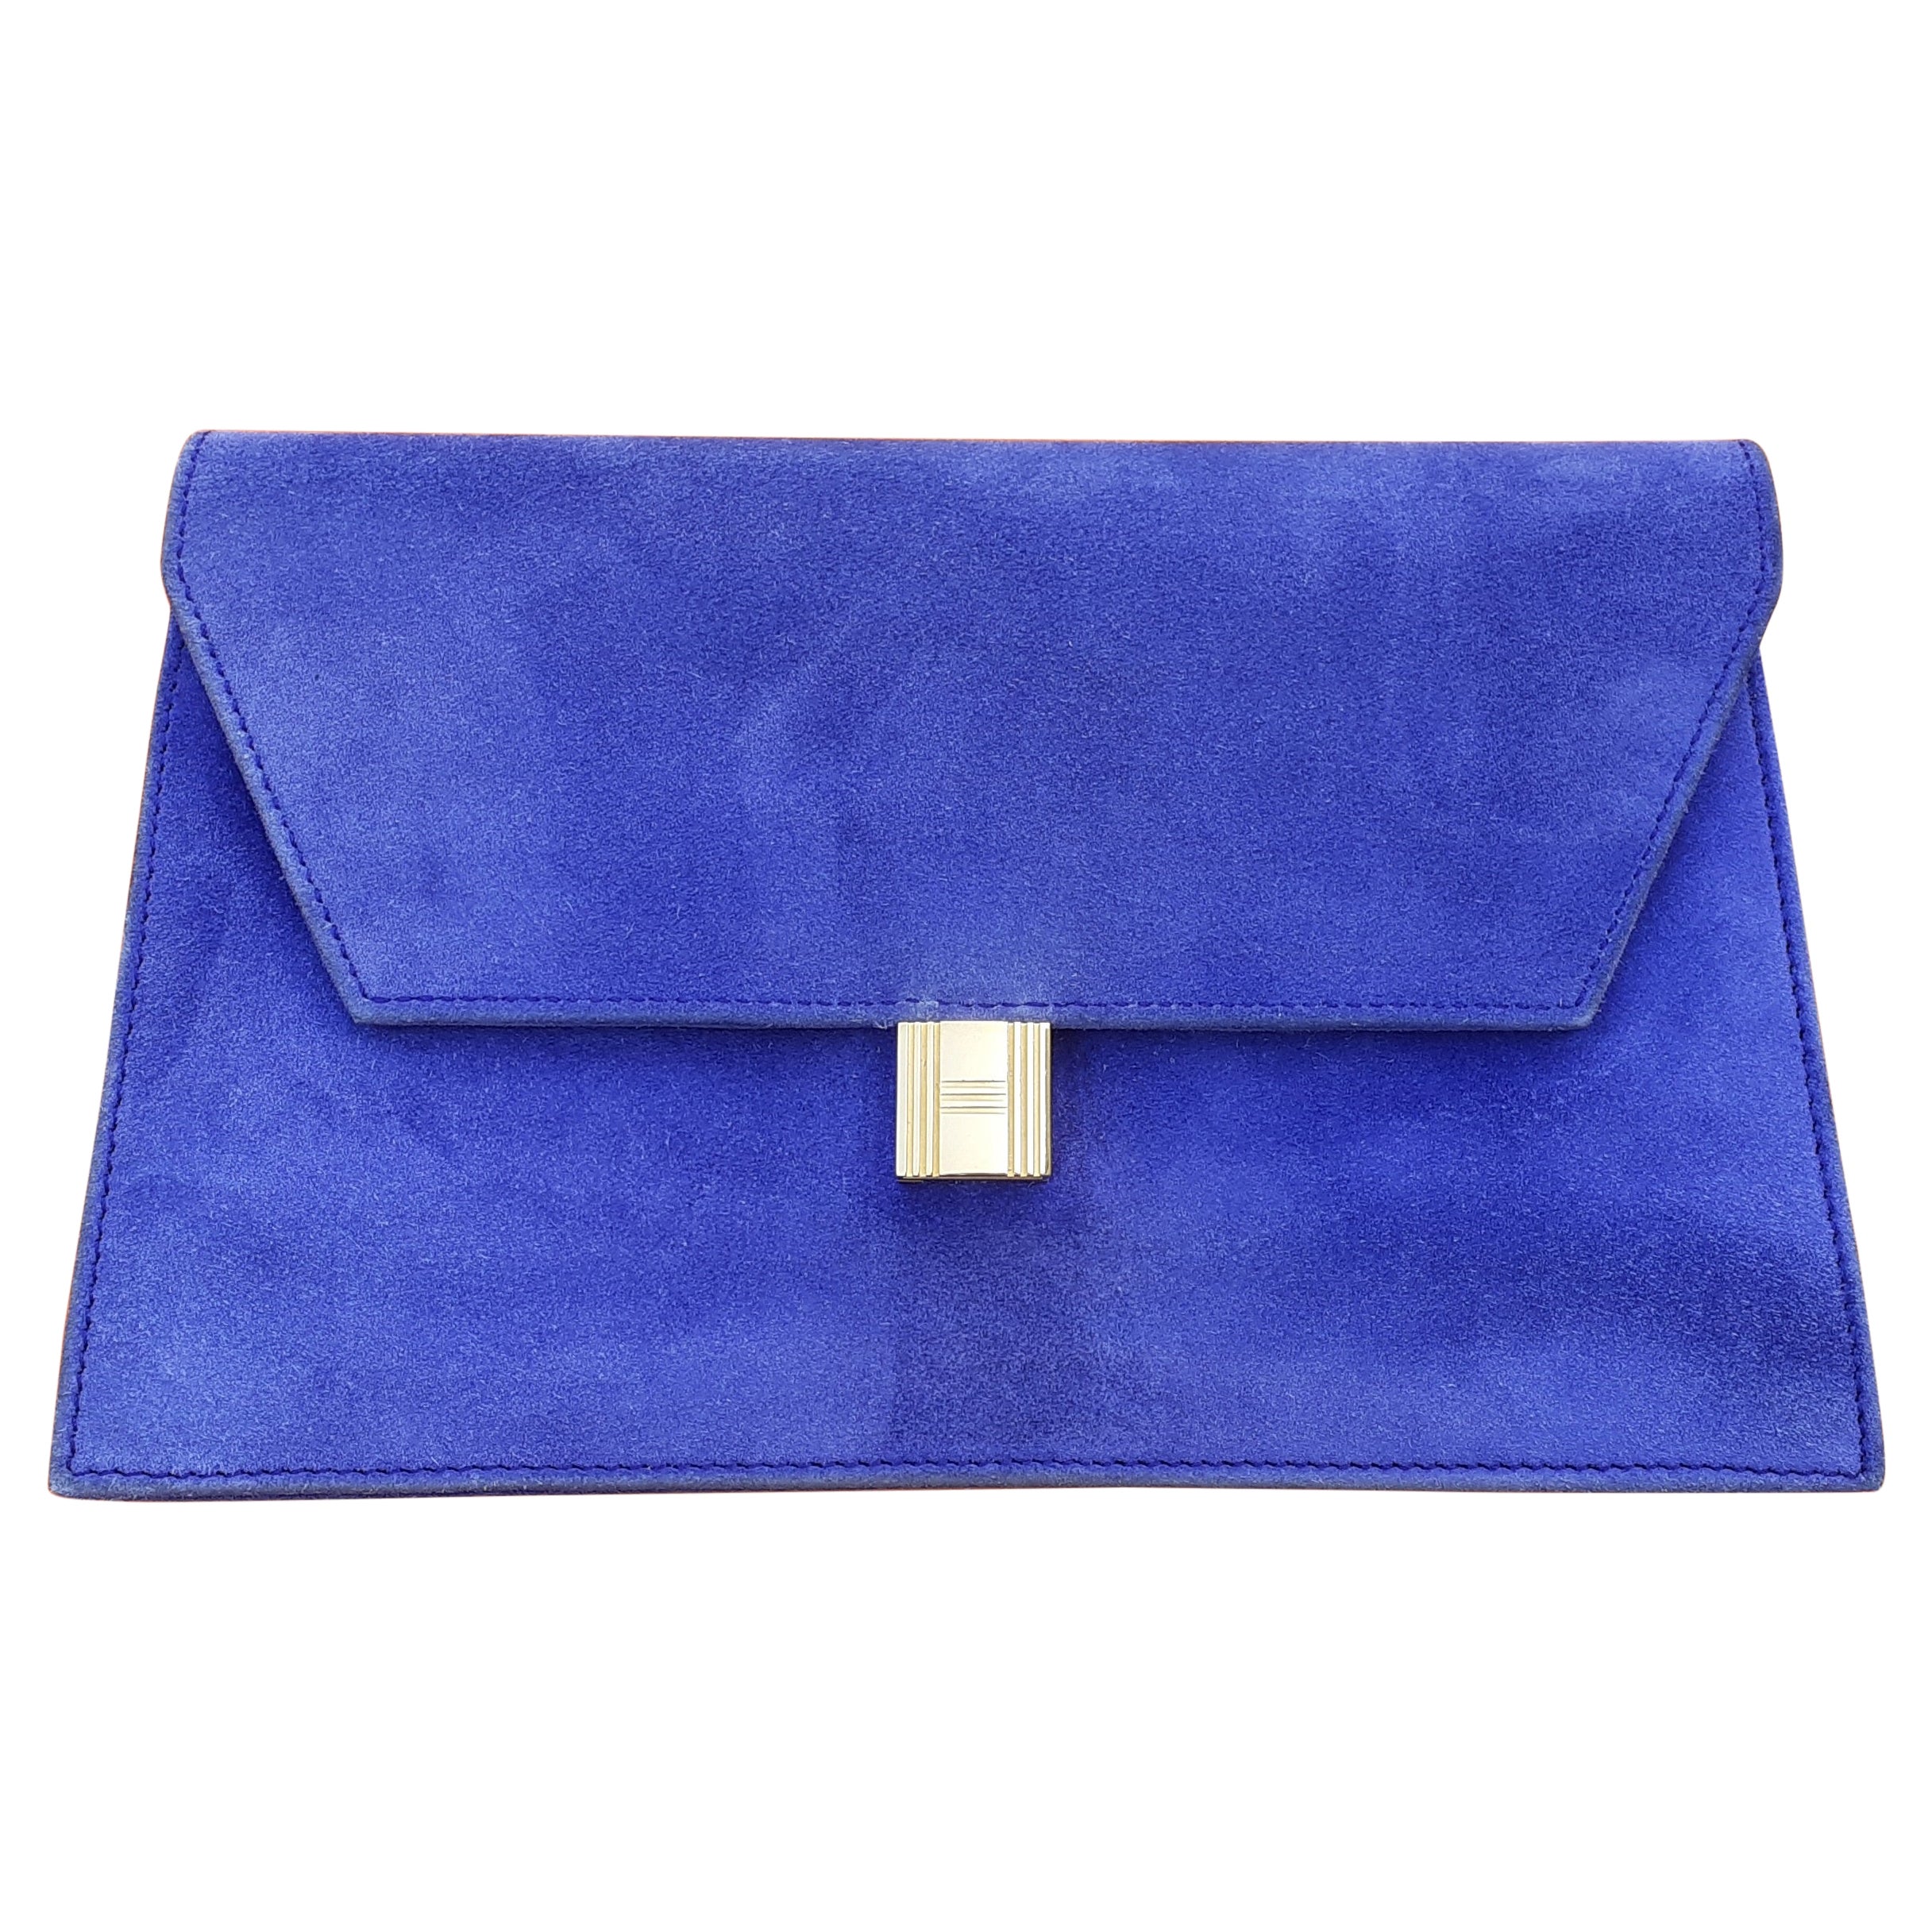 Hermès Padlock Bag Clutch Purse Doblis Leather Purple and Golden Hdw RARE